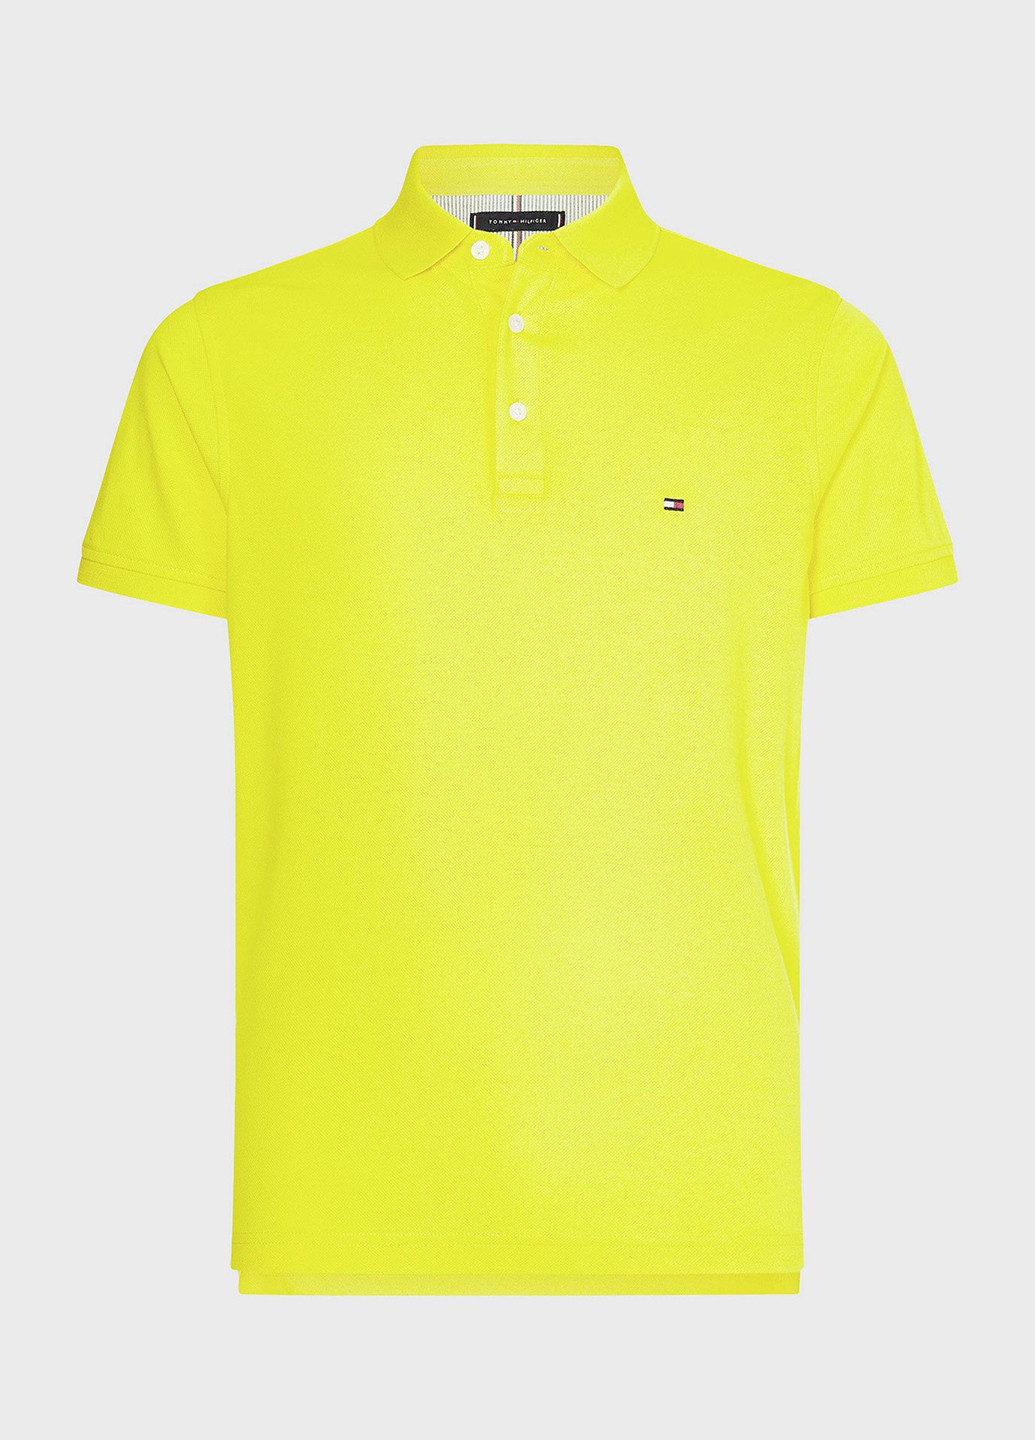 Желтая футболка-поло для мужчин Tommy Hilfiger однотонная